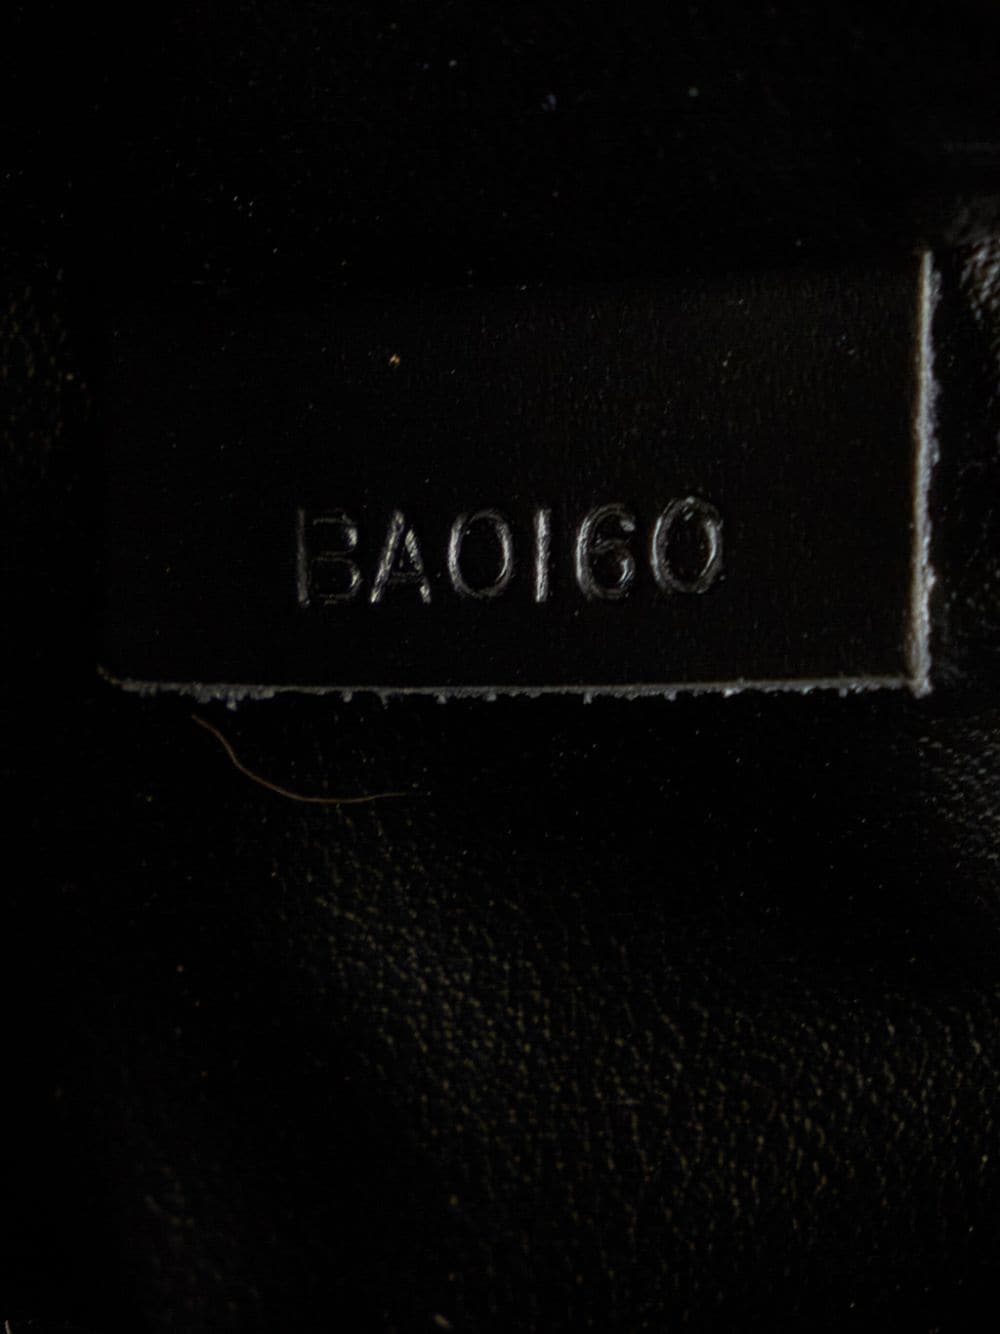 Louis Vuitton 2010 Pre-owned Damier Graphite Top-Zip Wash Bag - Black